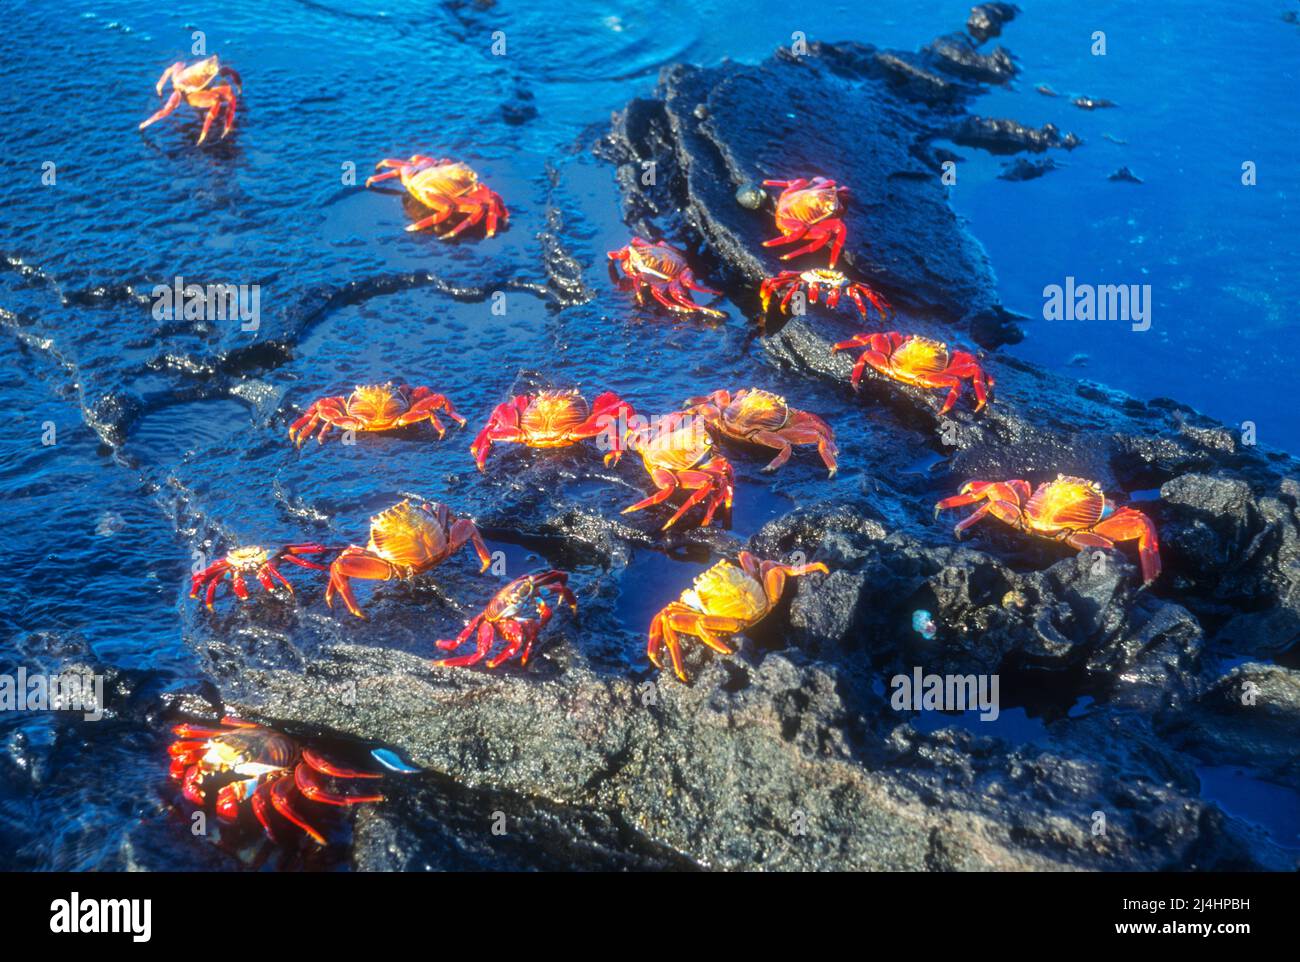 Südamerika; Ecuador; Galapagos-Inseln; Meeresleben; Krustentiere; Krabbe; Sally Lightfoot Crab; Grapsus grapsus Stockfoto